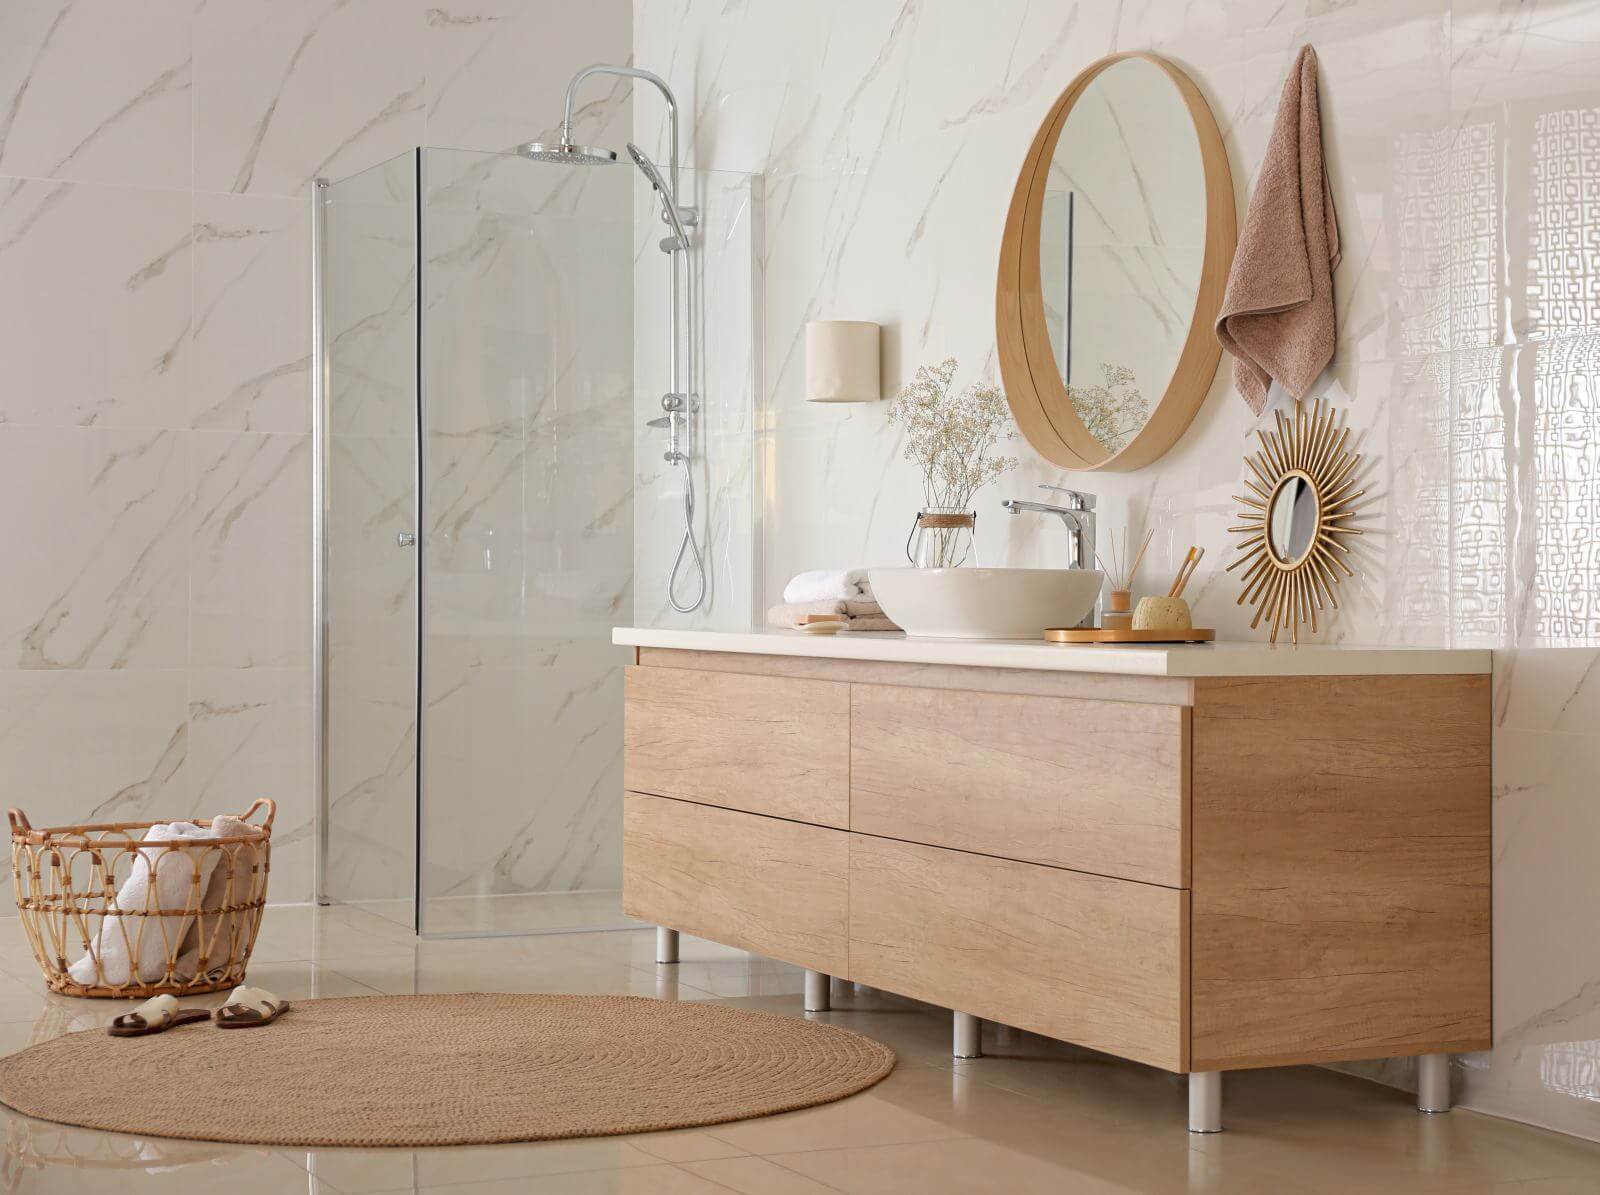 Modern bathroom interior with vessel sink and big mirror